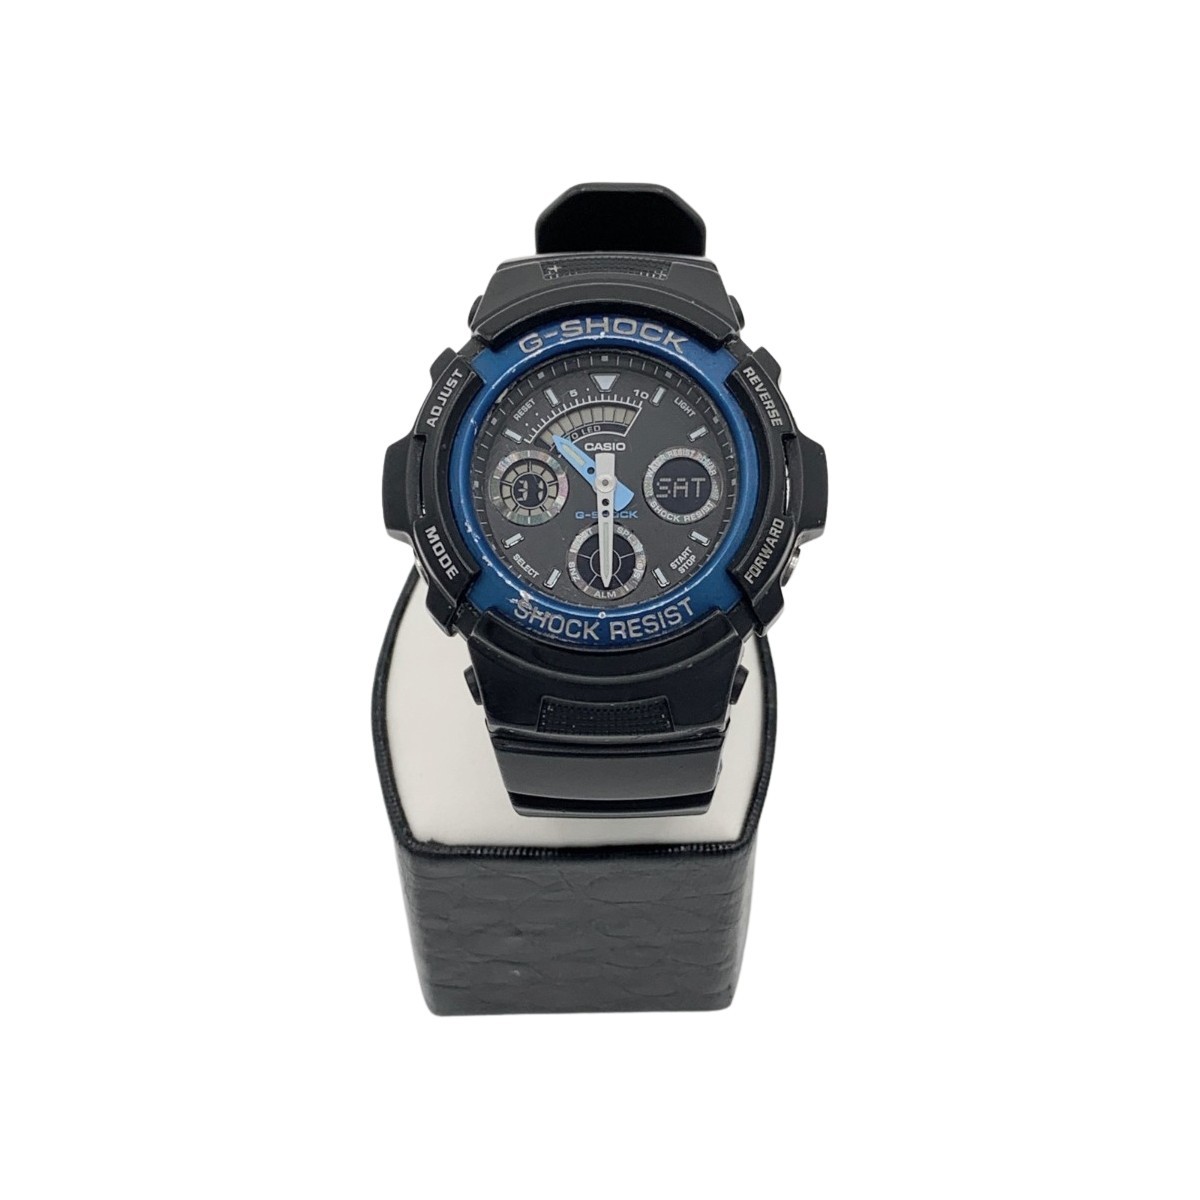 〇〇 CASIO カシオ Gショック クォーツ 腕時計 AW-591-2AJF ブラック x ブルー やや傷や汚れあり